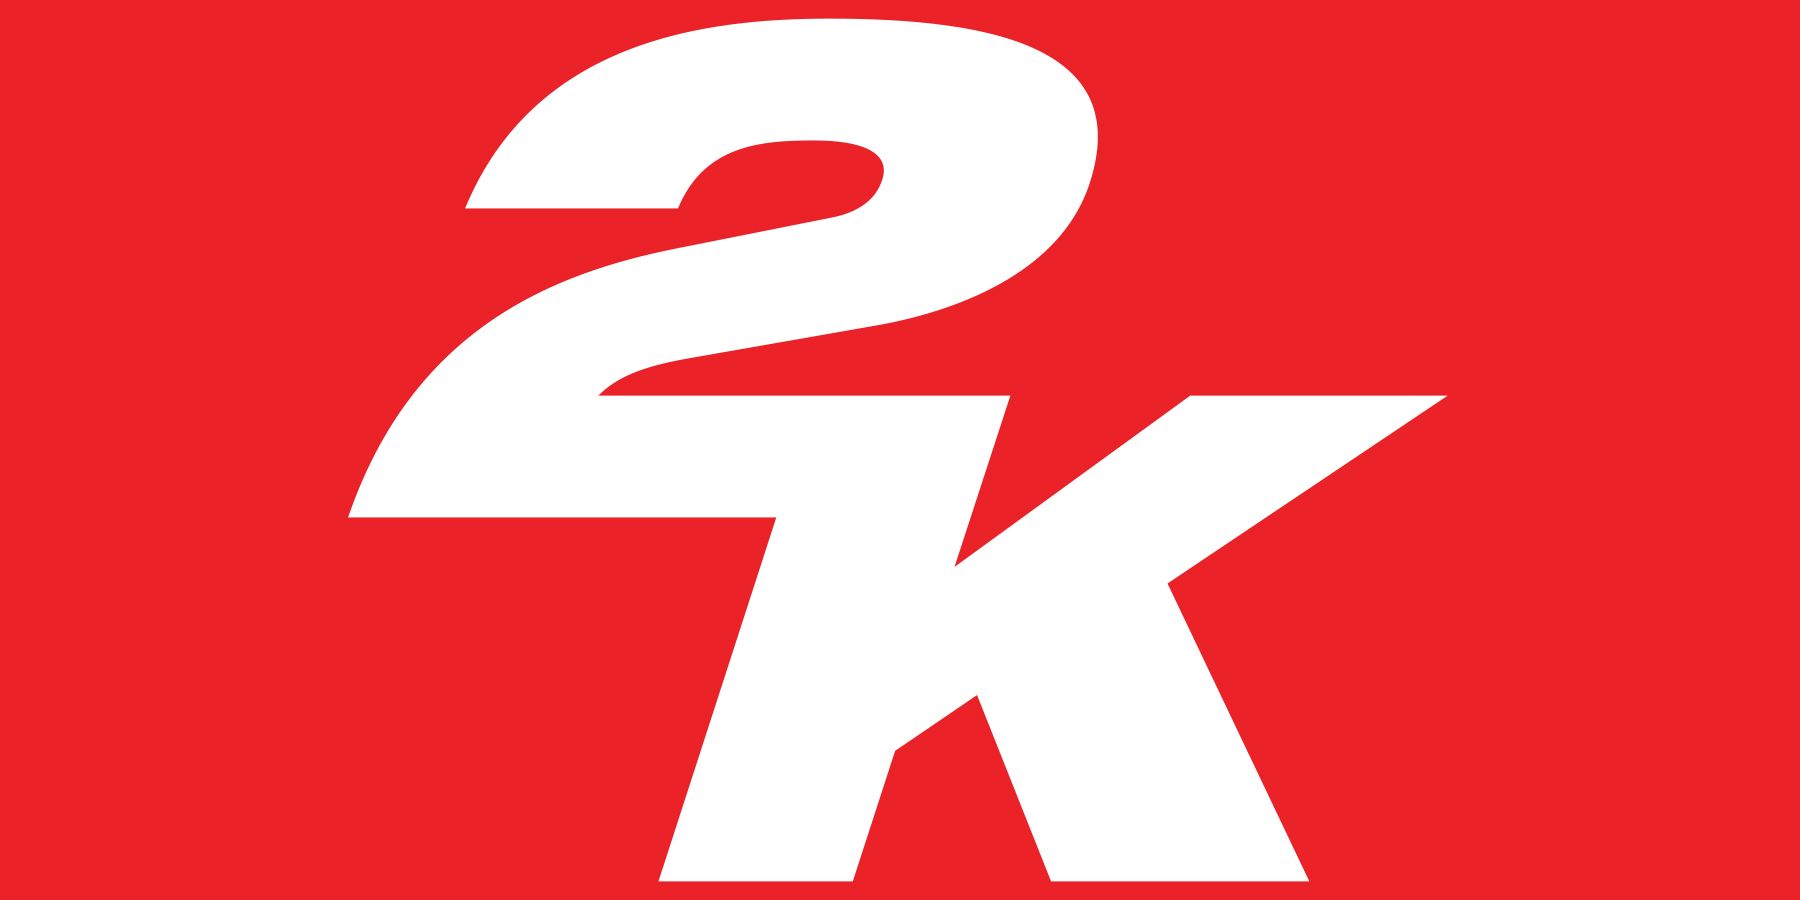 2021 2K logo on red background